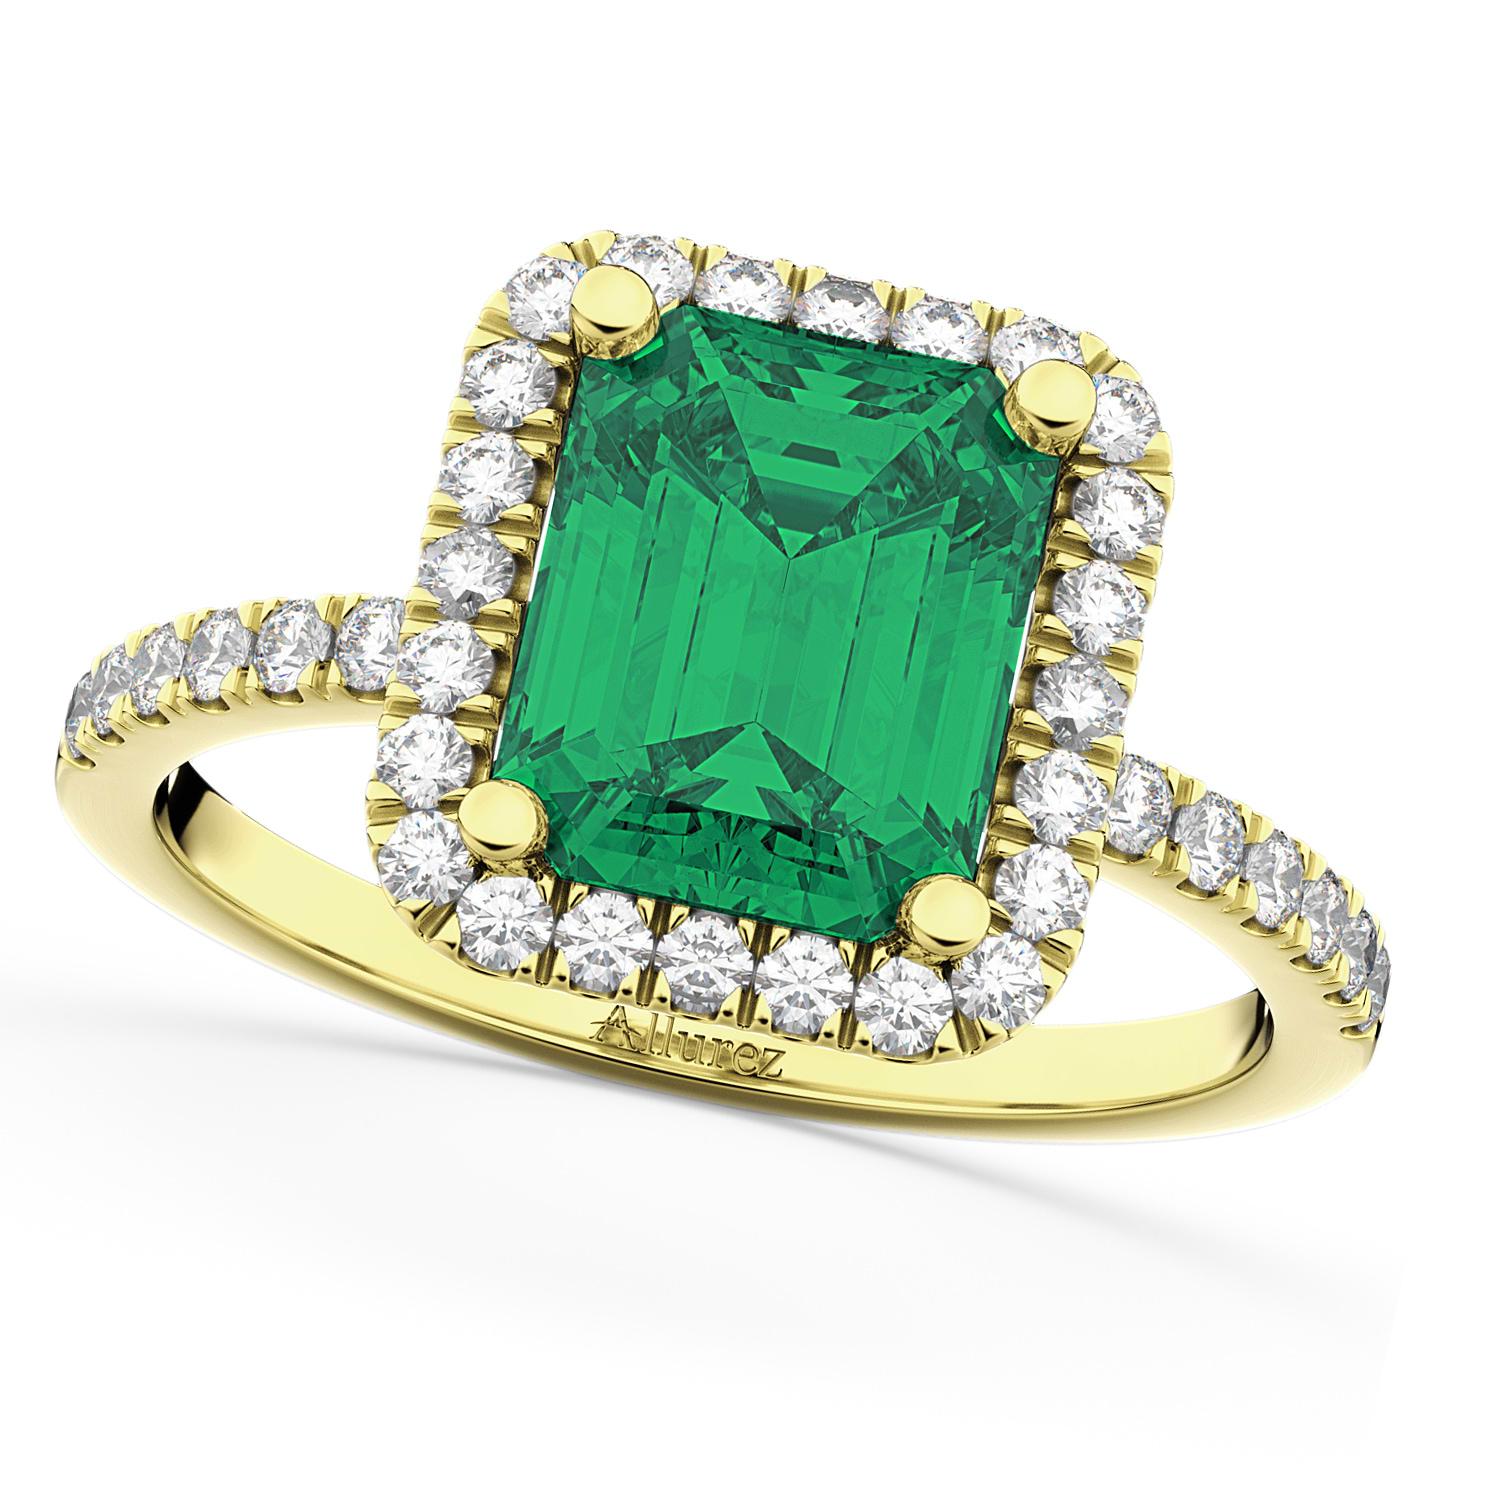 Lab Emerald & Lab Grown Diamond Engagement Ring 18k Yellow Gold (3.32ct)